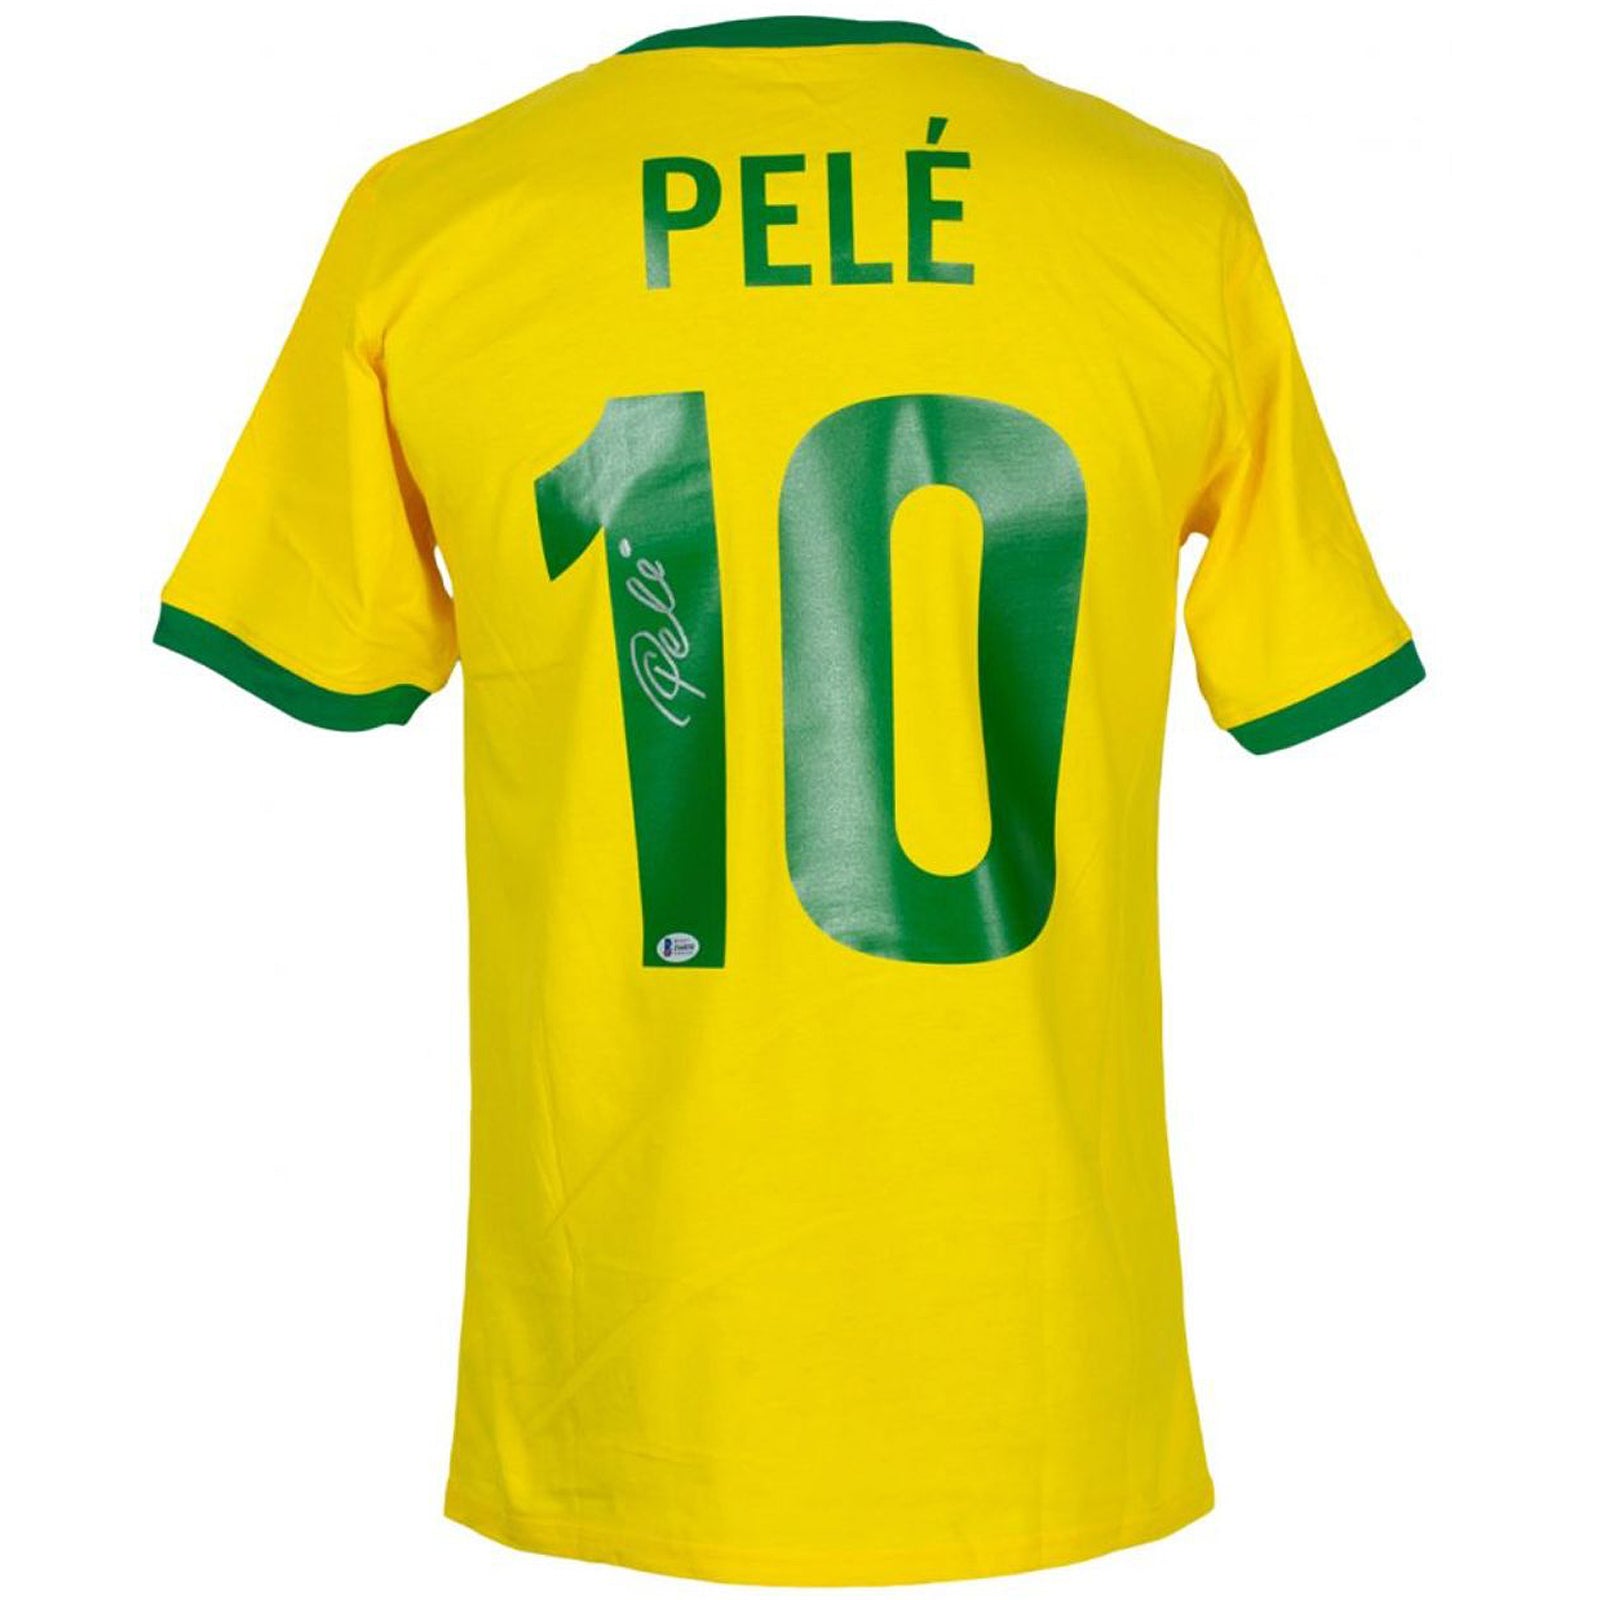 Pele Autographed Brazil (Yellow #10) Replica Soccer Jersey